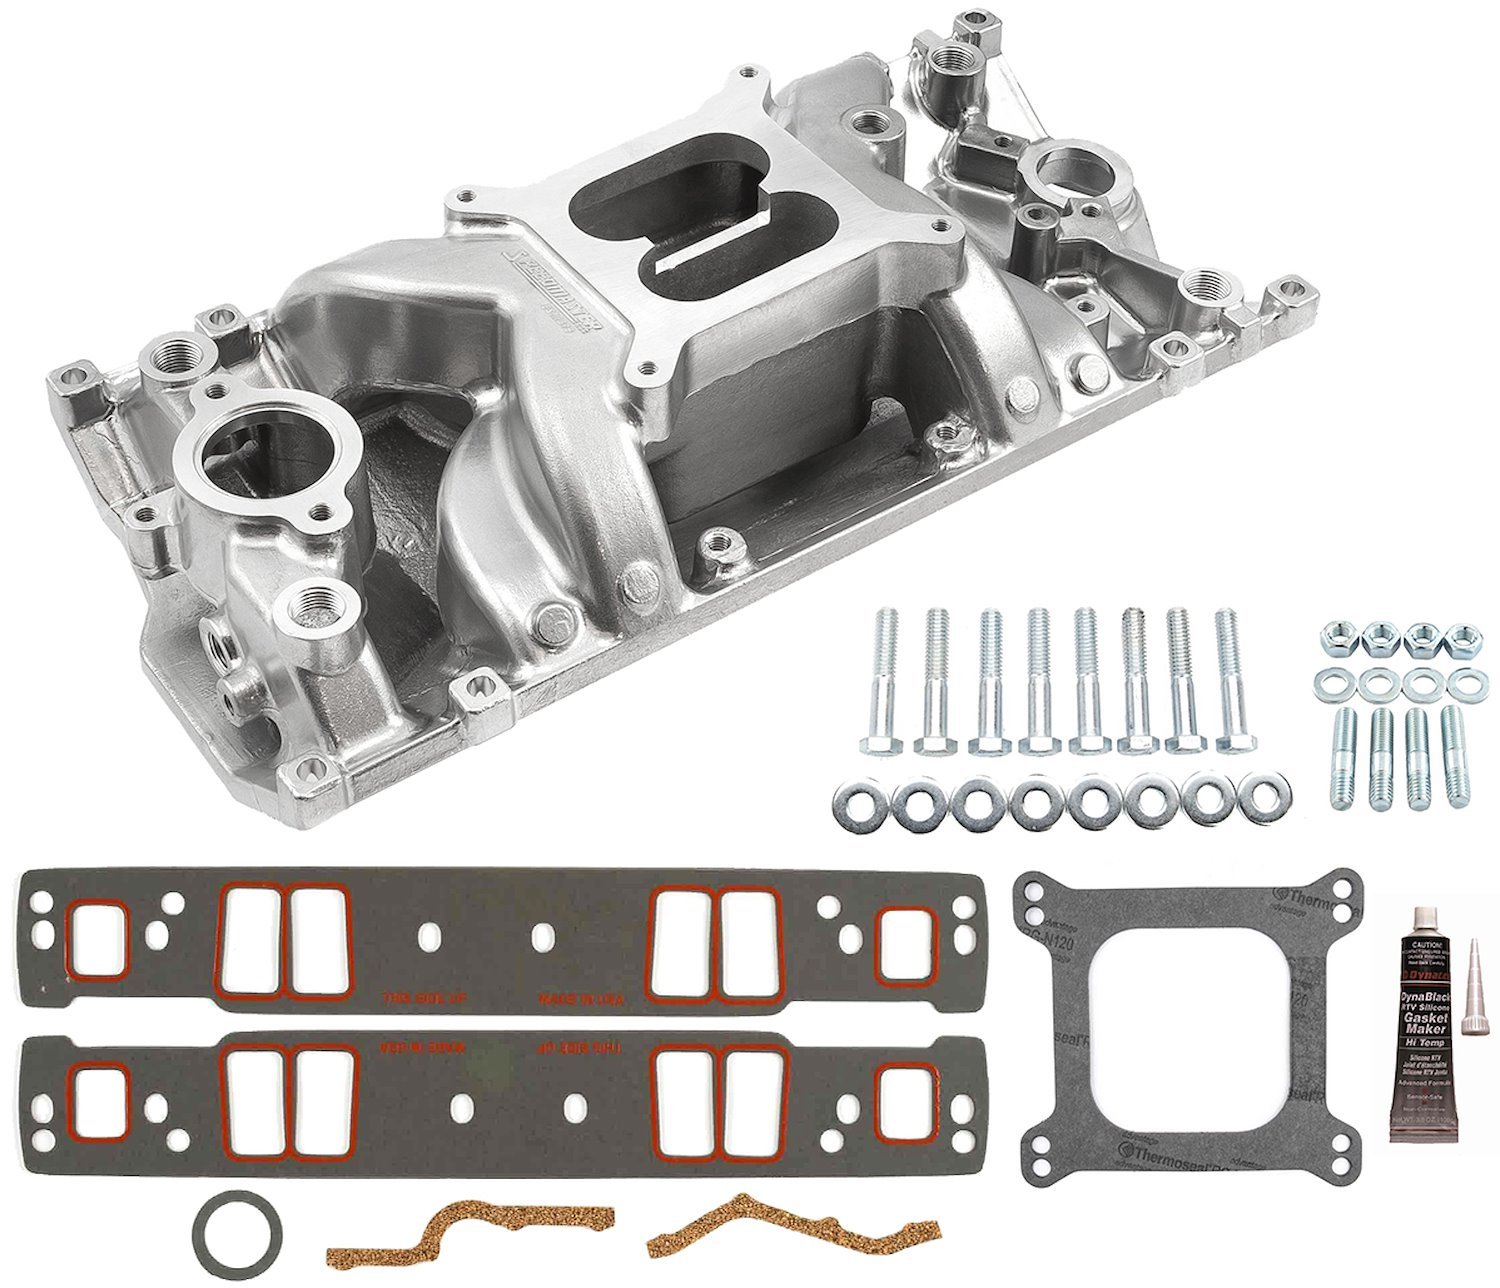 MidRise Air Intake Manifold Kit Small Block Chevy 350 Vortec - Machine Polished Finish